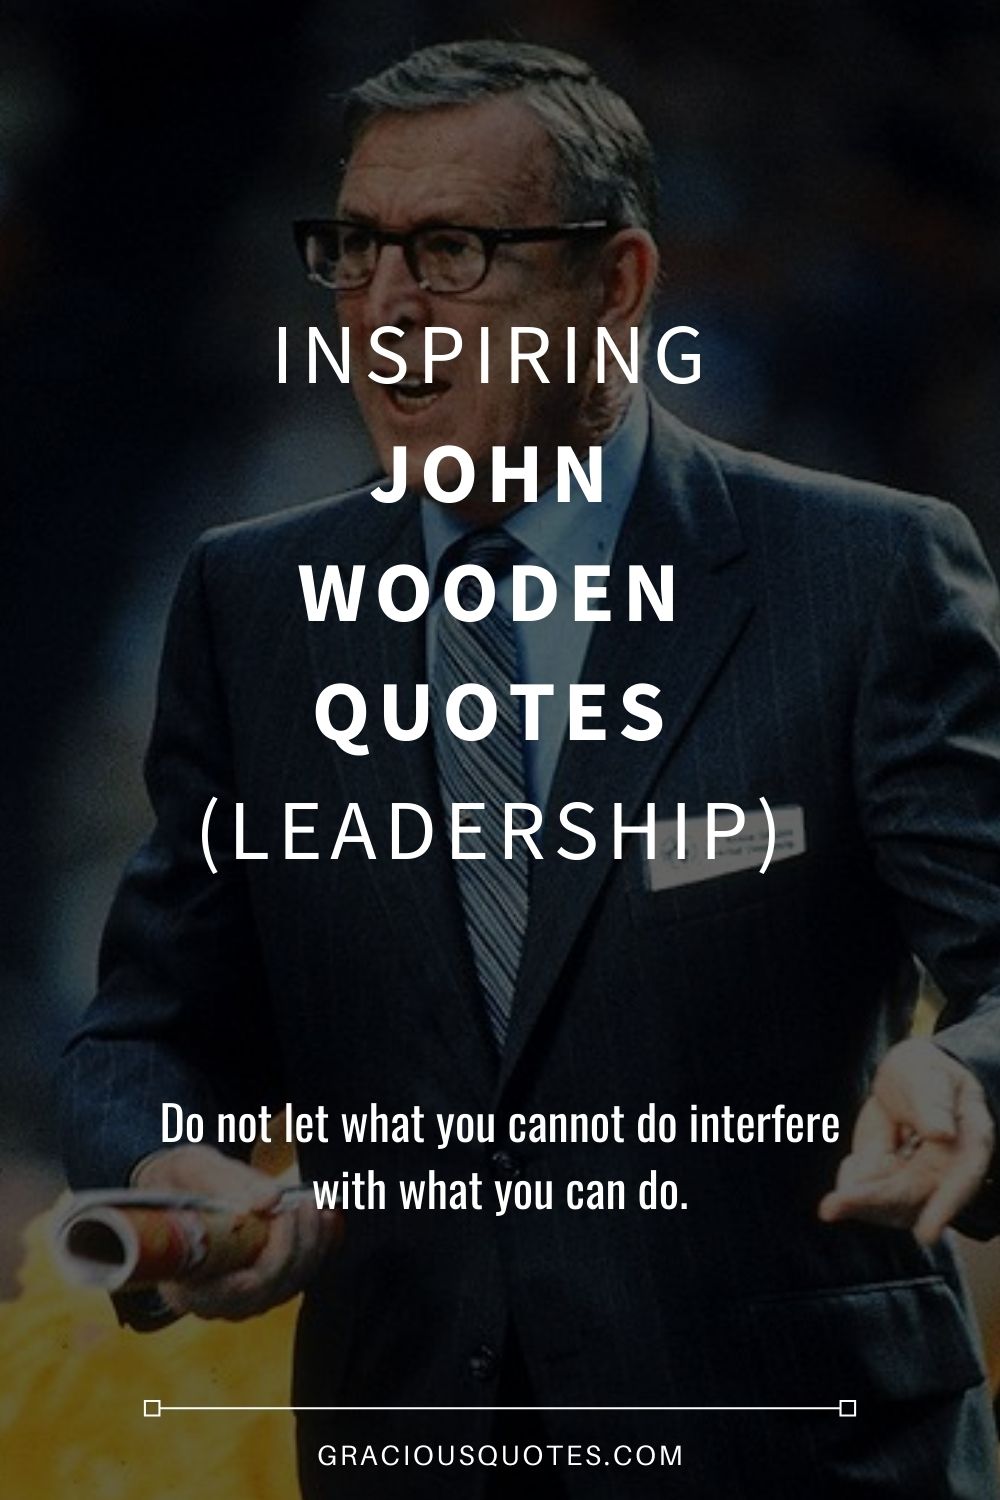 Inspiring John Wooden Quotes (LEADERSHIP) - Gracious Quotes